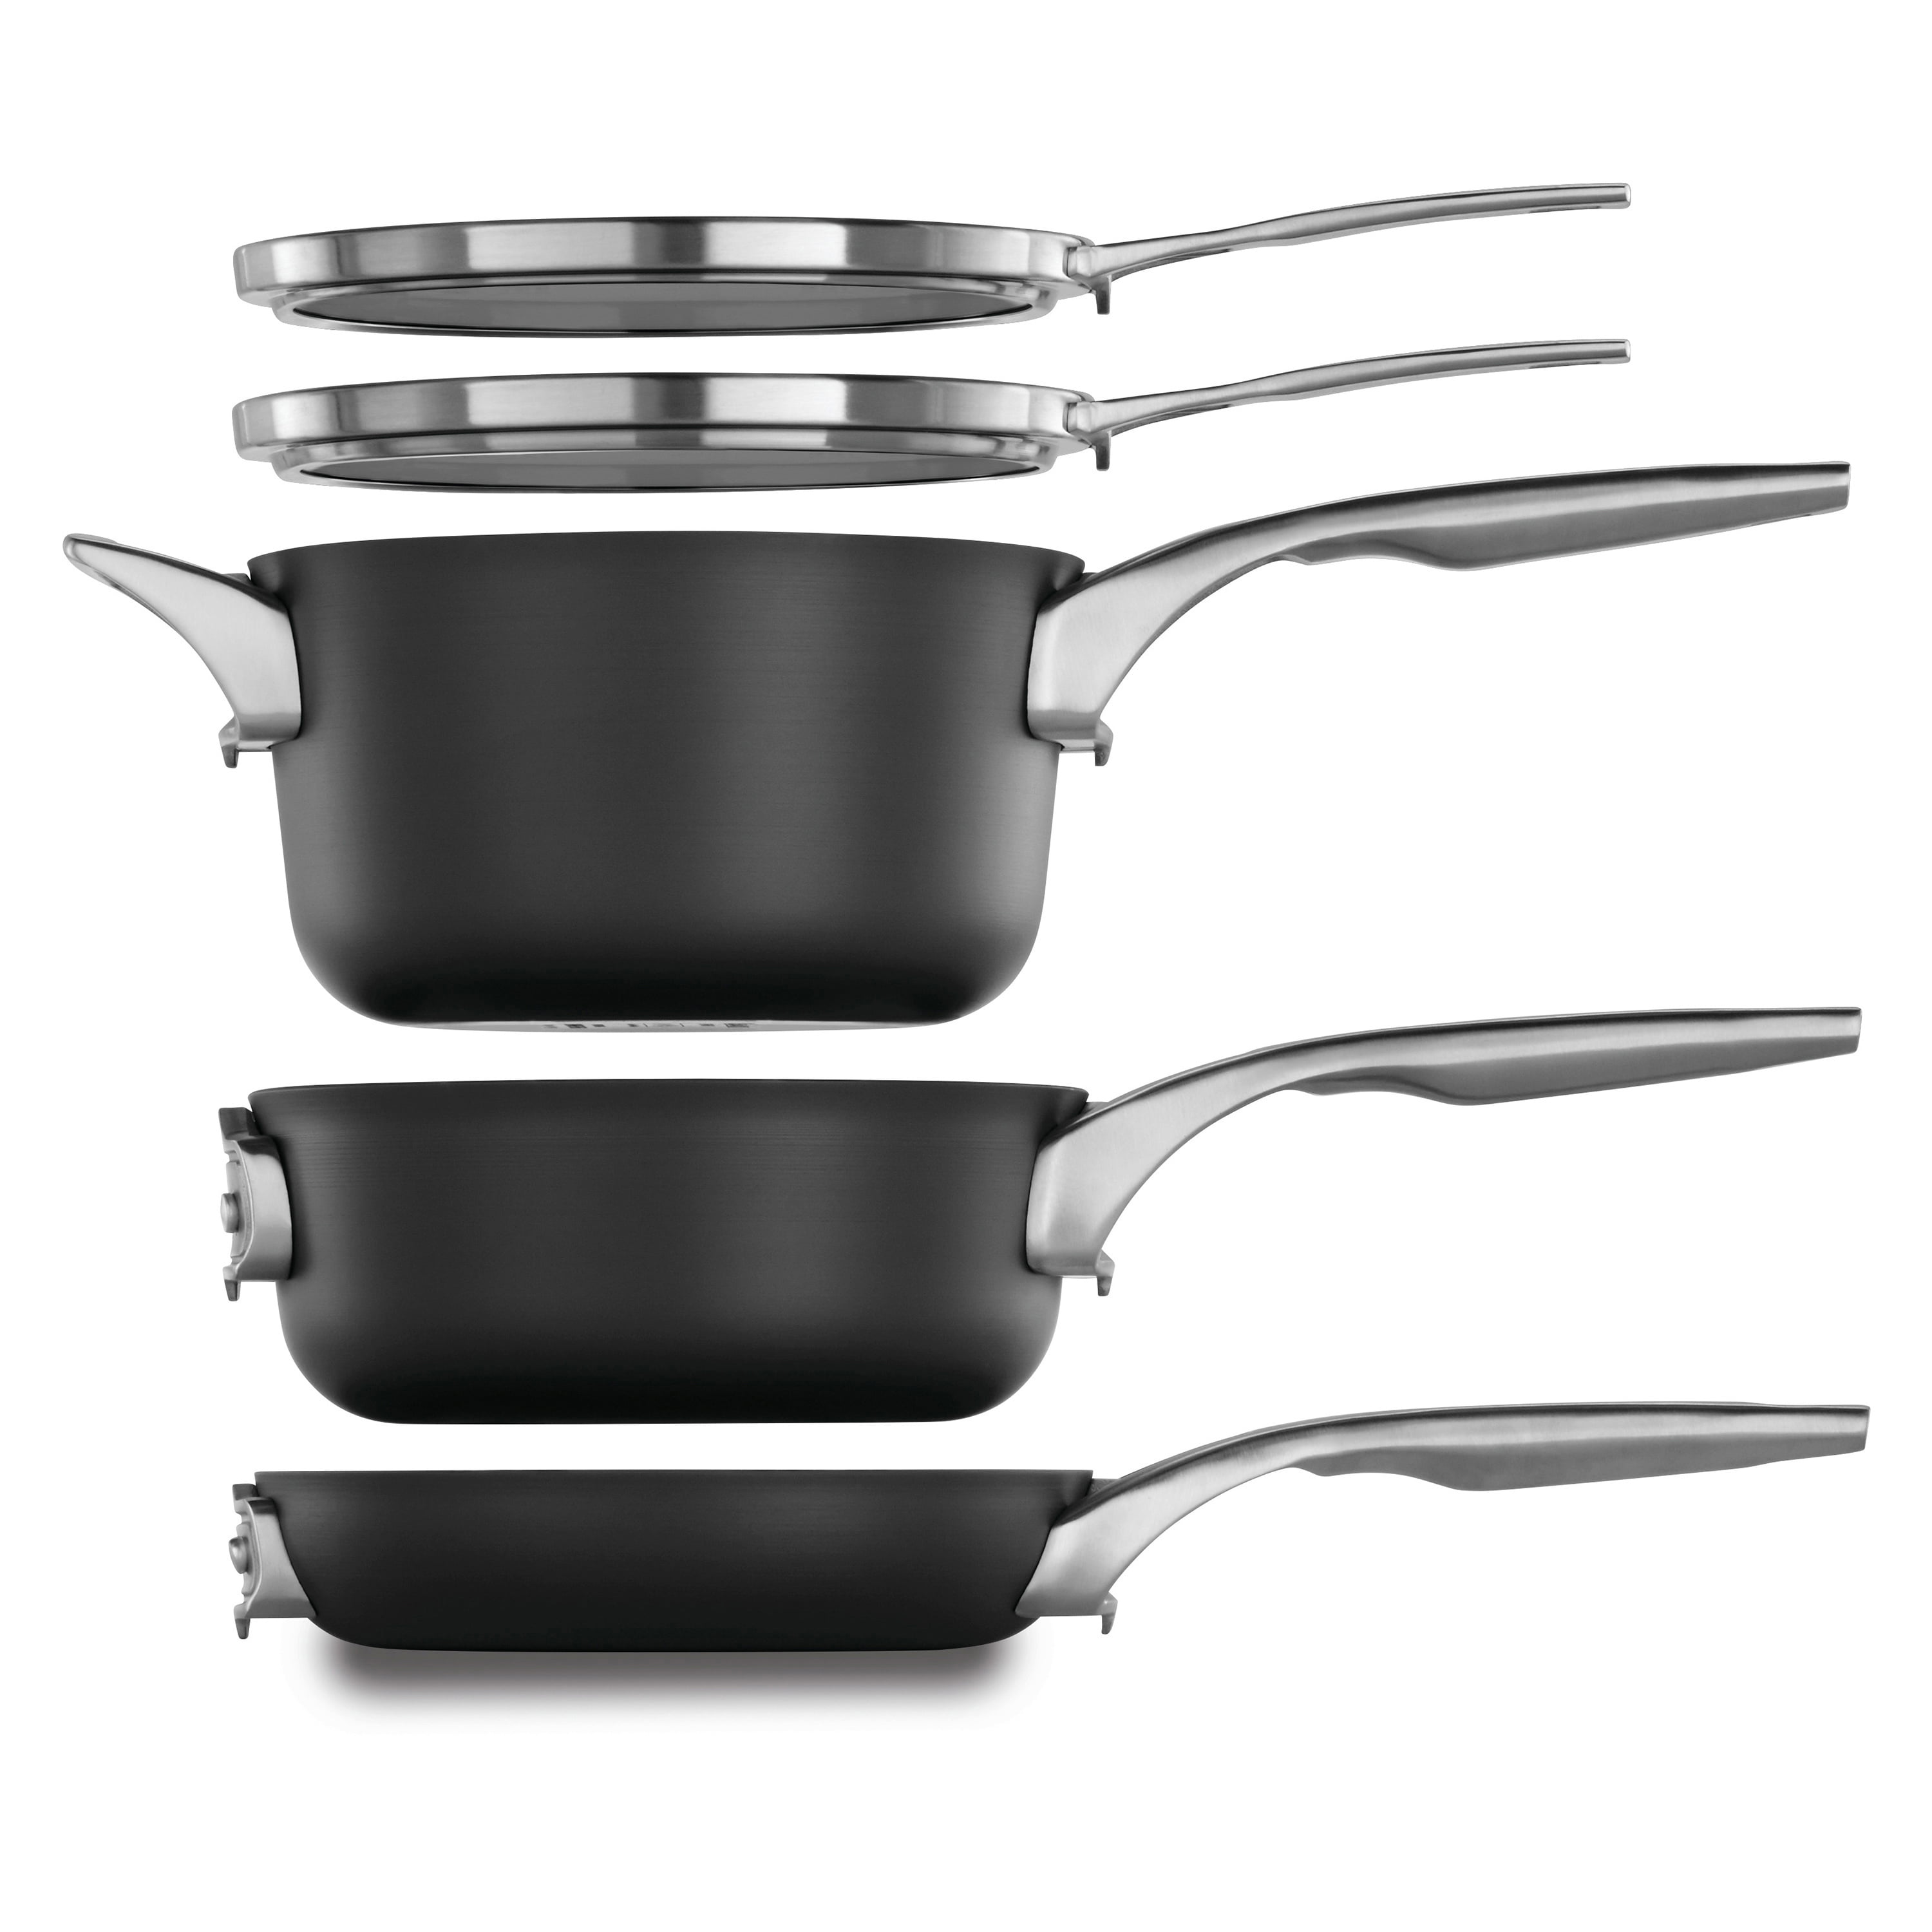 Super HOT* Calphalon Premier Nonstick 8-Piece Cookware Set for